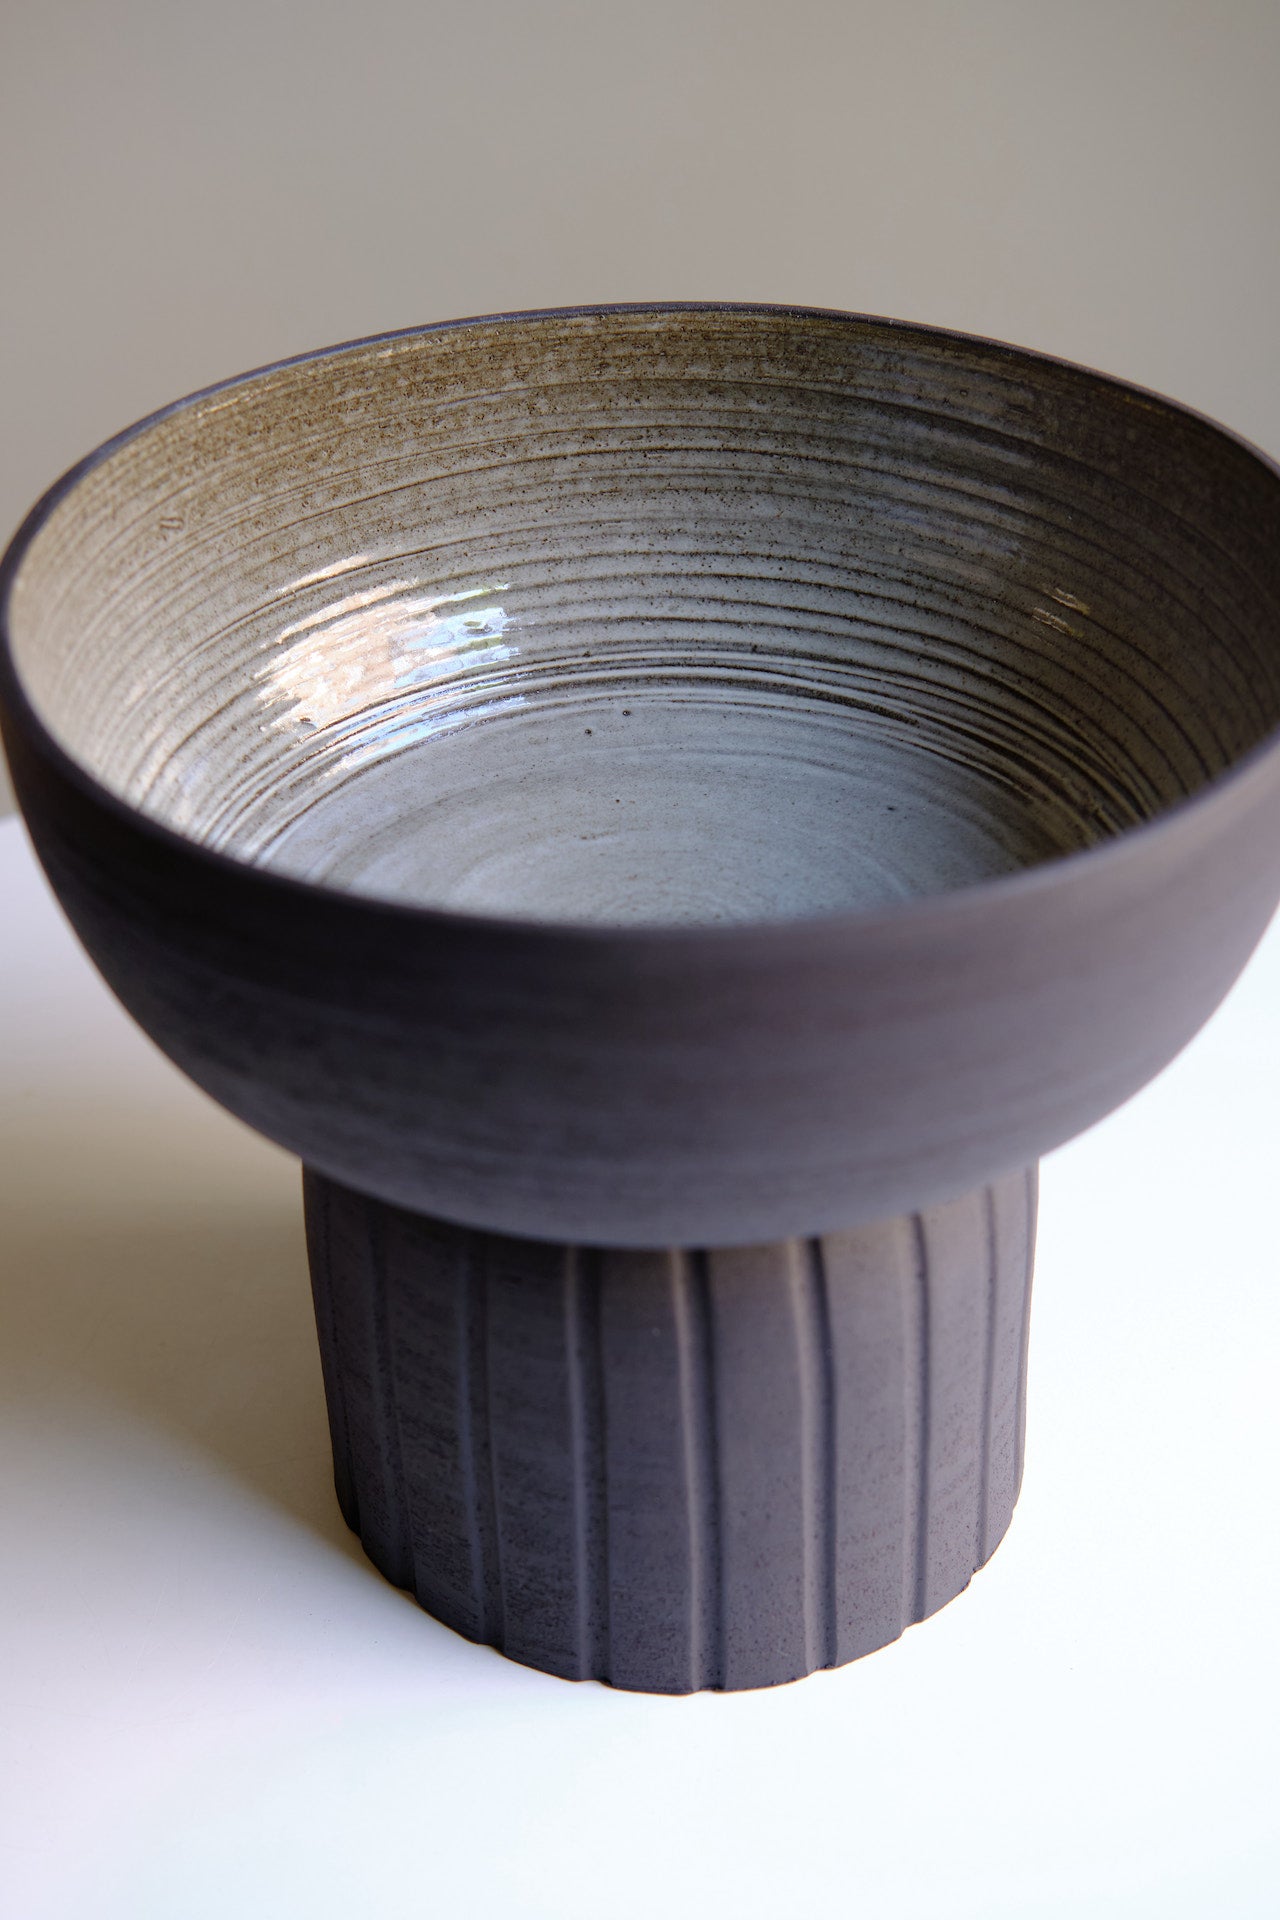 Pedestal bowl no. 15